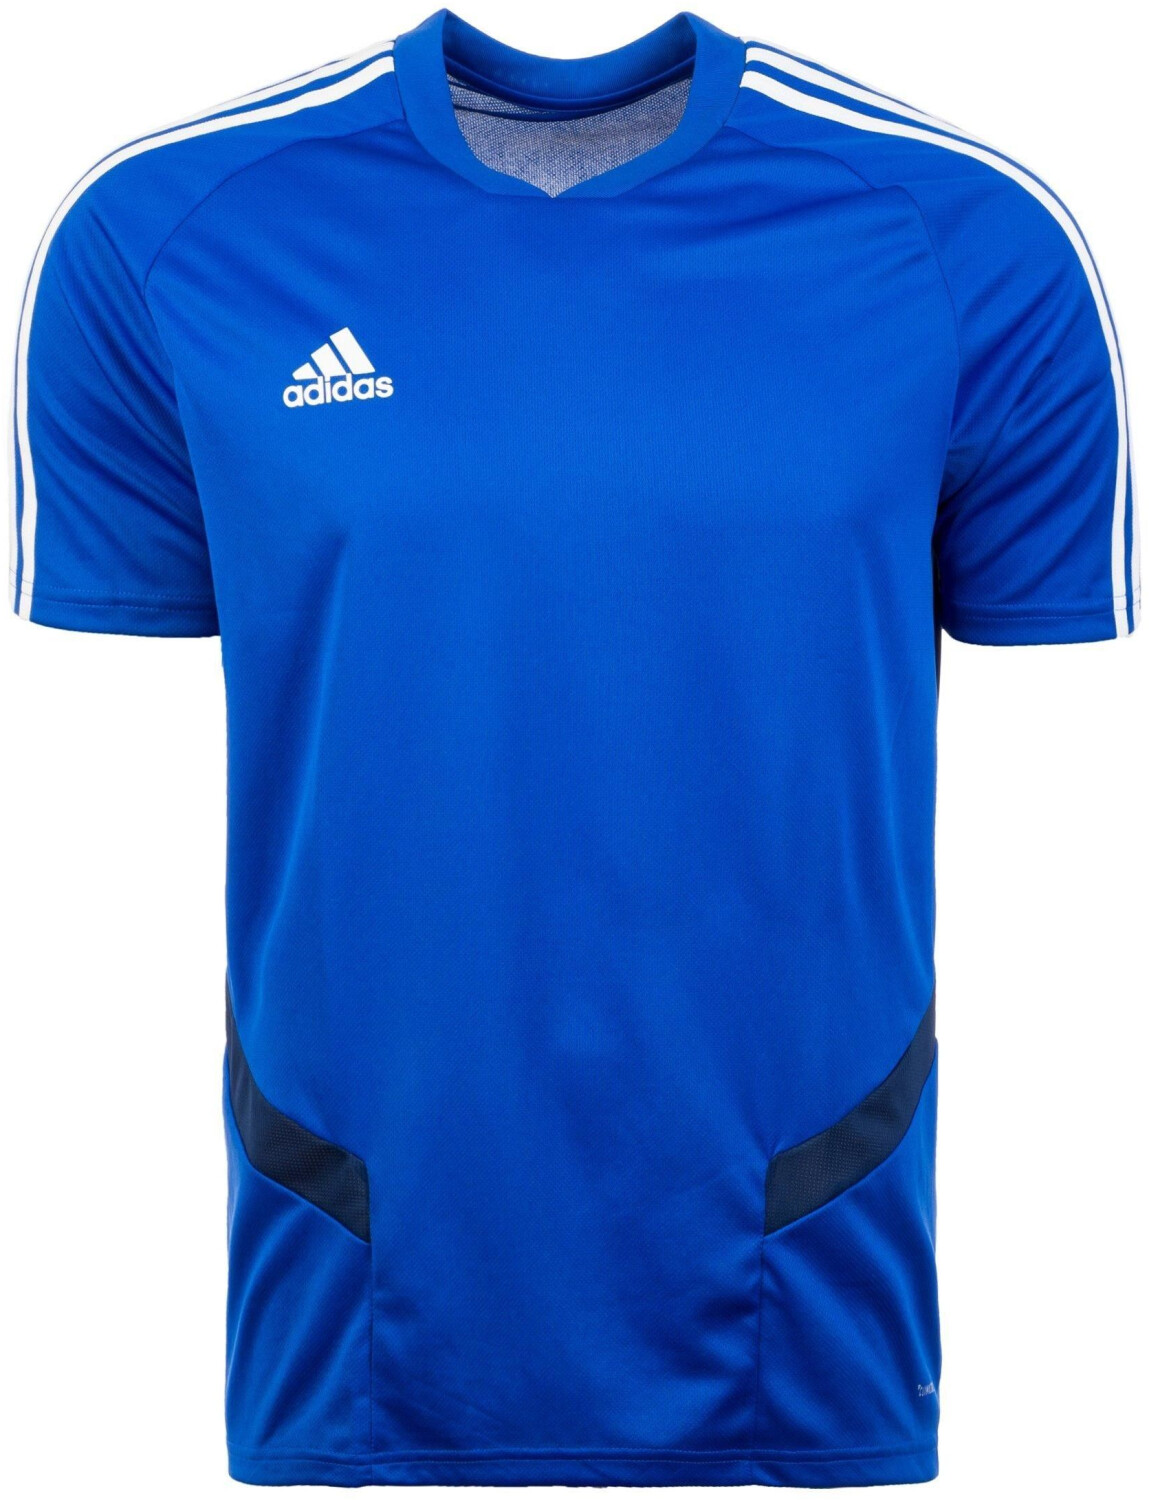 Adidas Tiro 19 Training Jersey bold blue/dark blue/white desde 17,00 â¬ | Compara precios en idealo